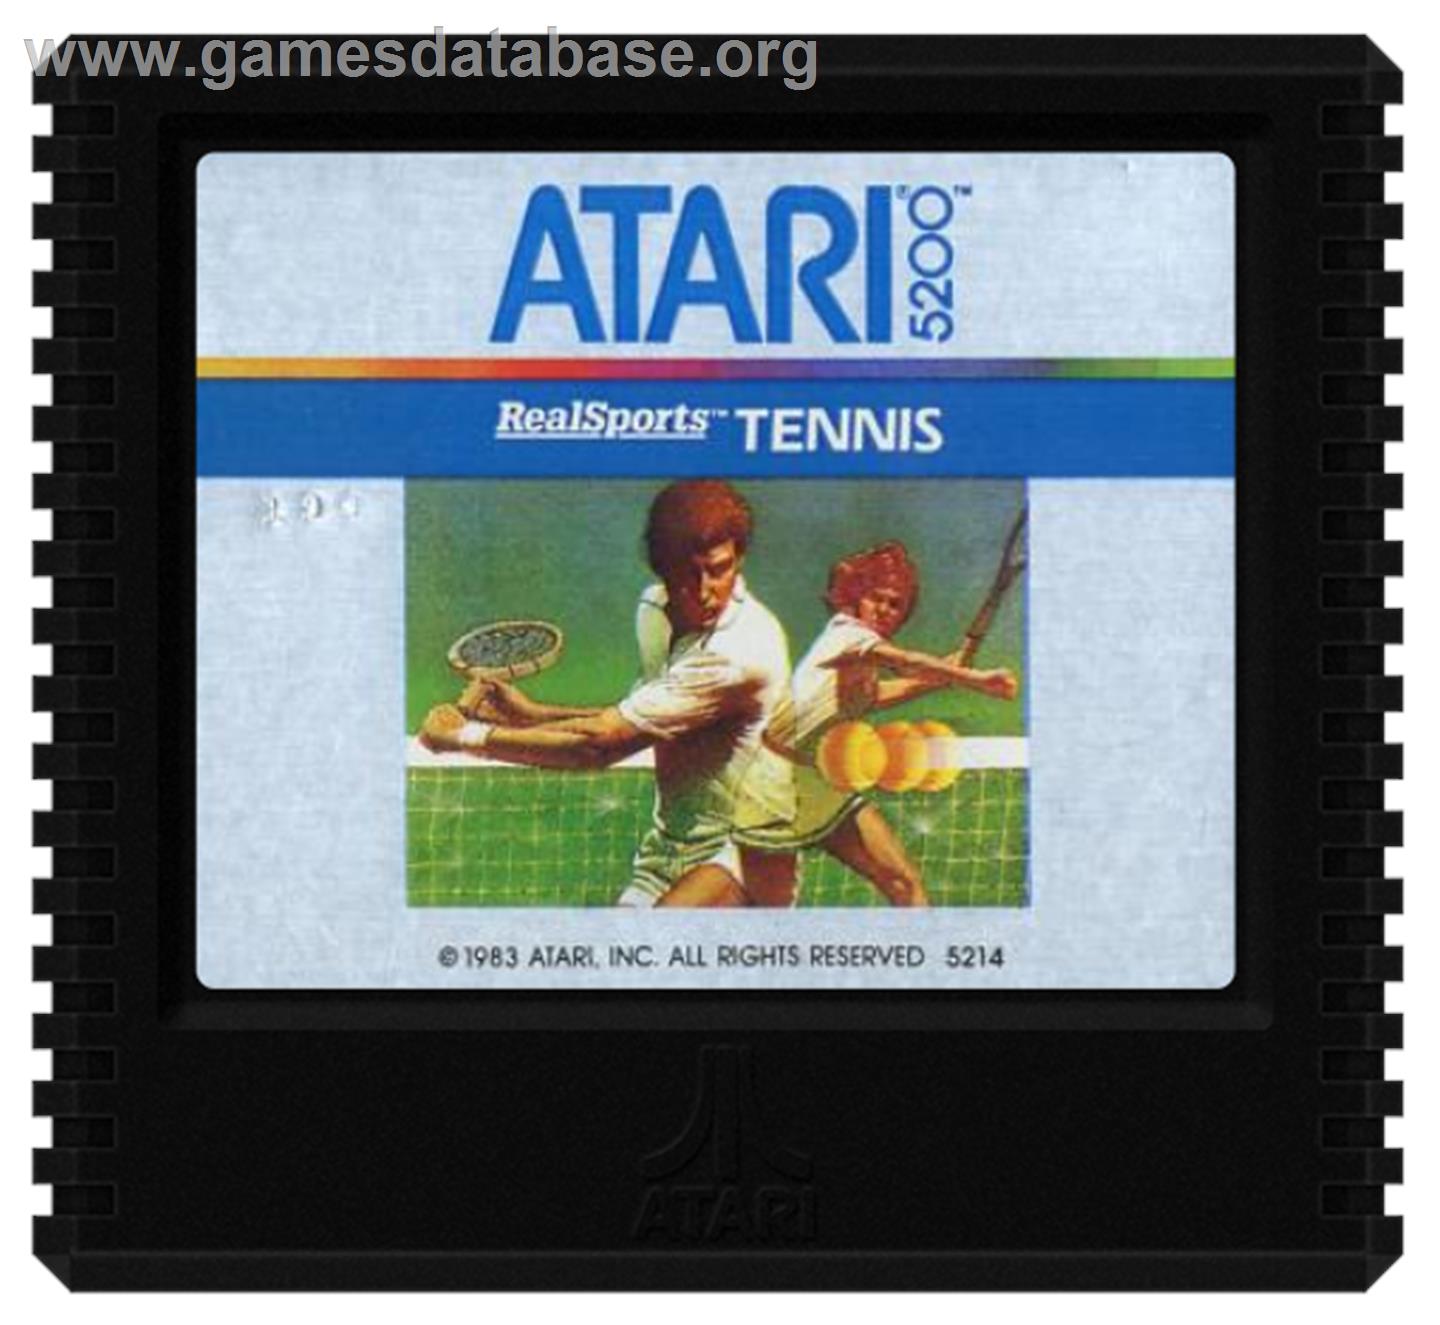 RealSports Tennis - Atari 5200 - Artwork - Cartridge